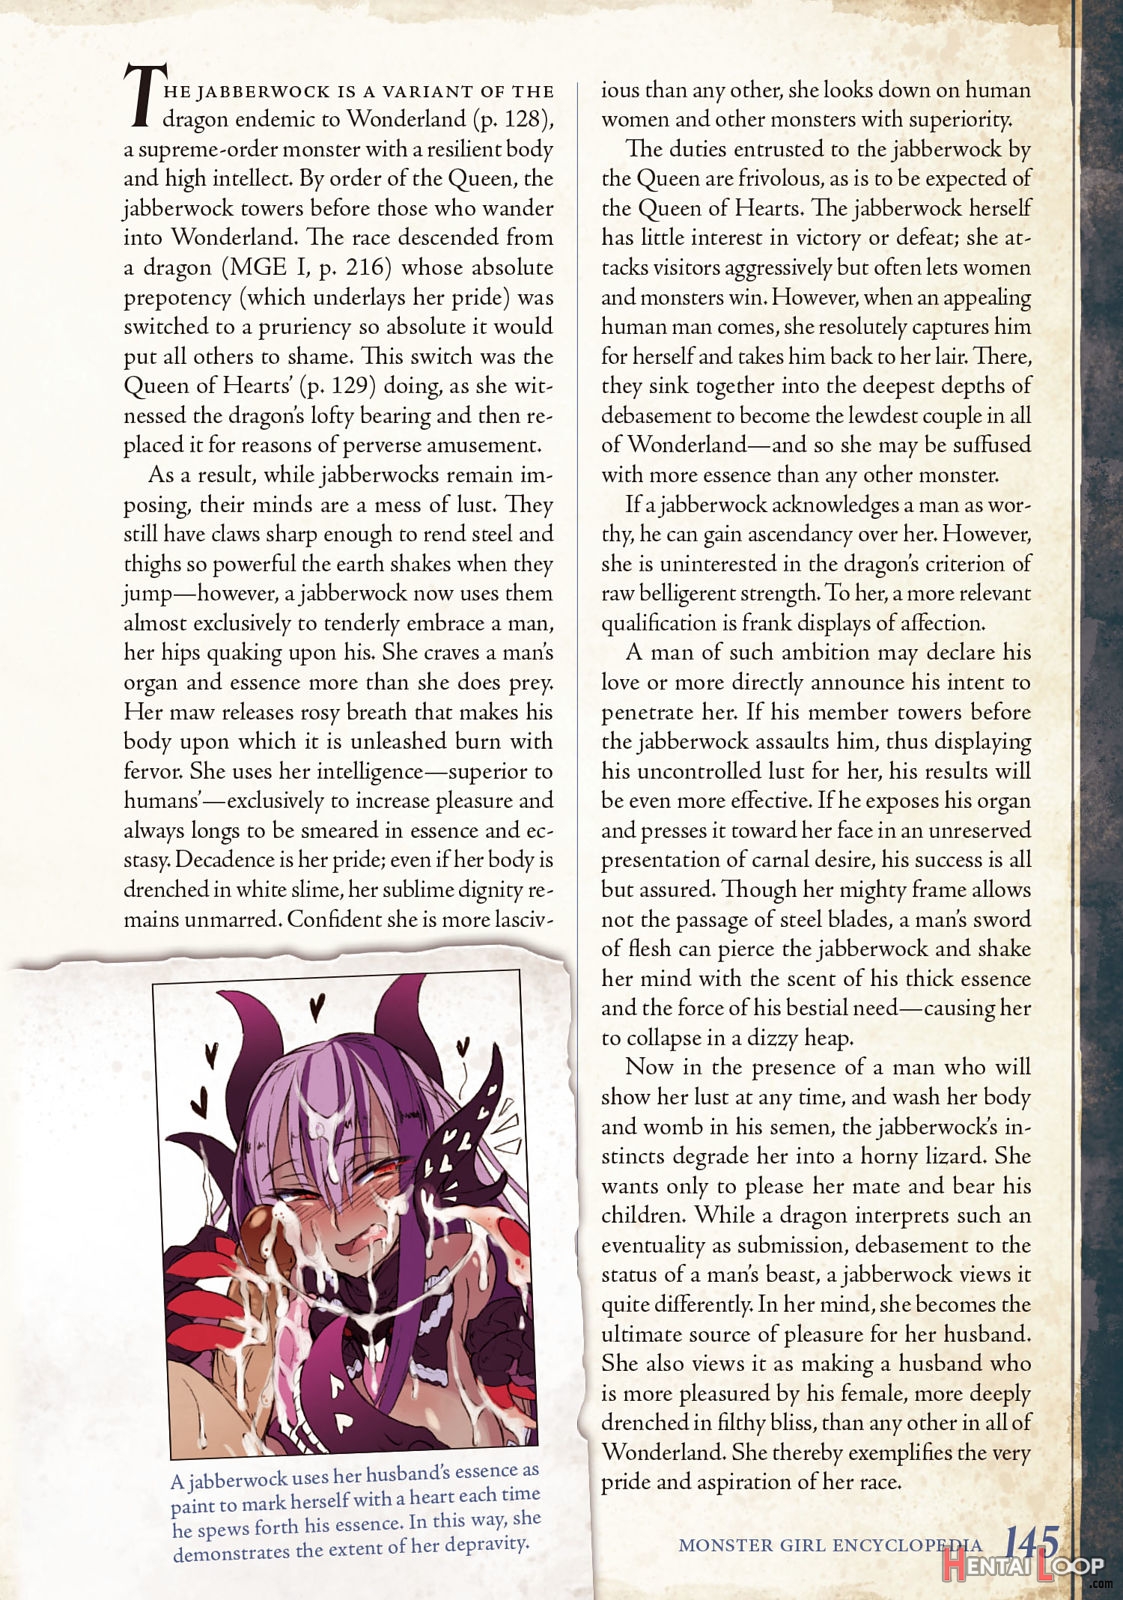 Monster Girl Encyclopedia Vol. 2 page 146